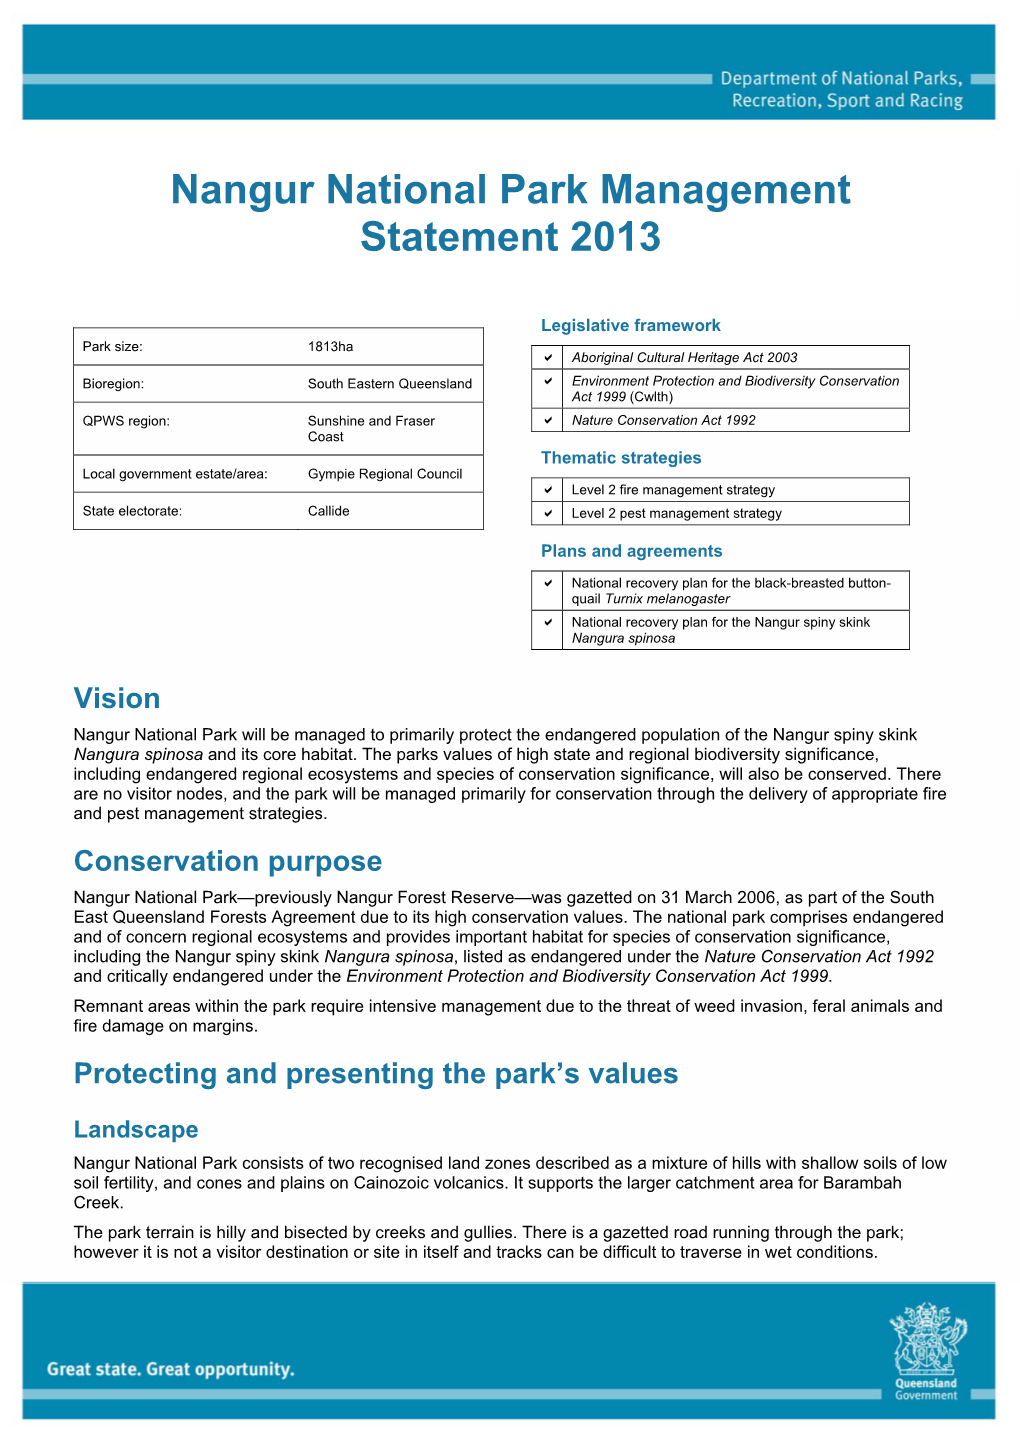 Nangur National Park Management Statement 2013